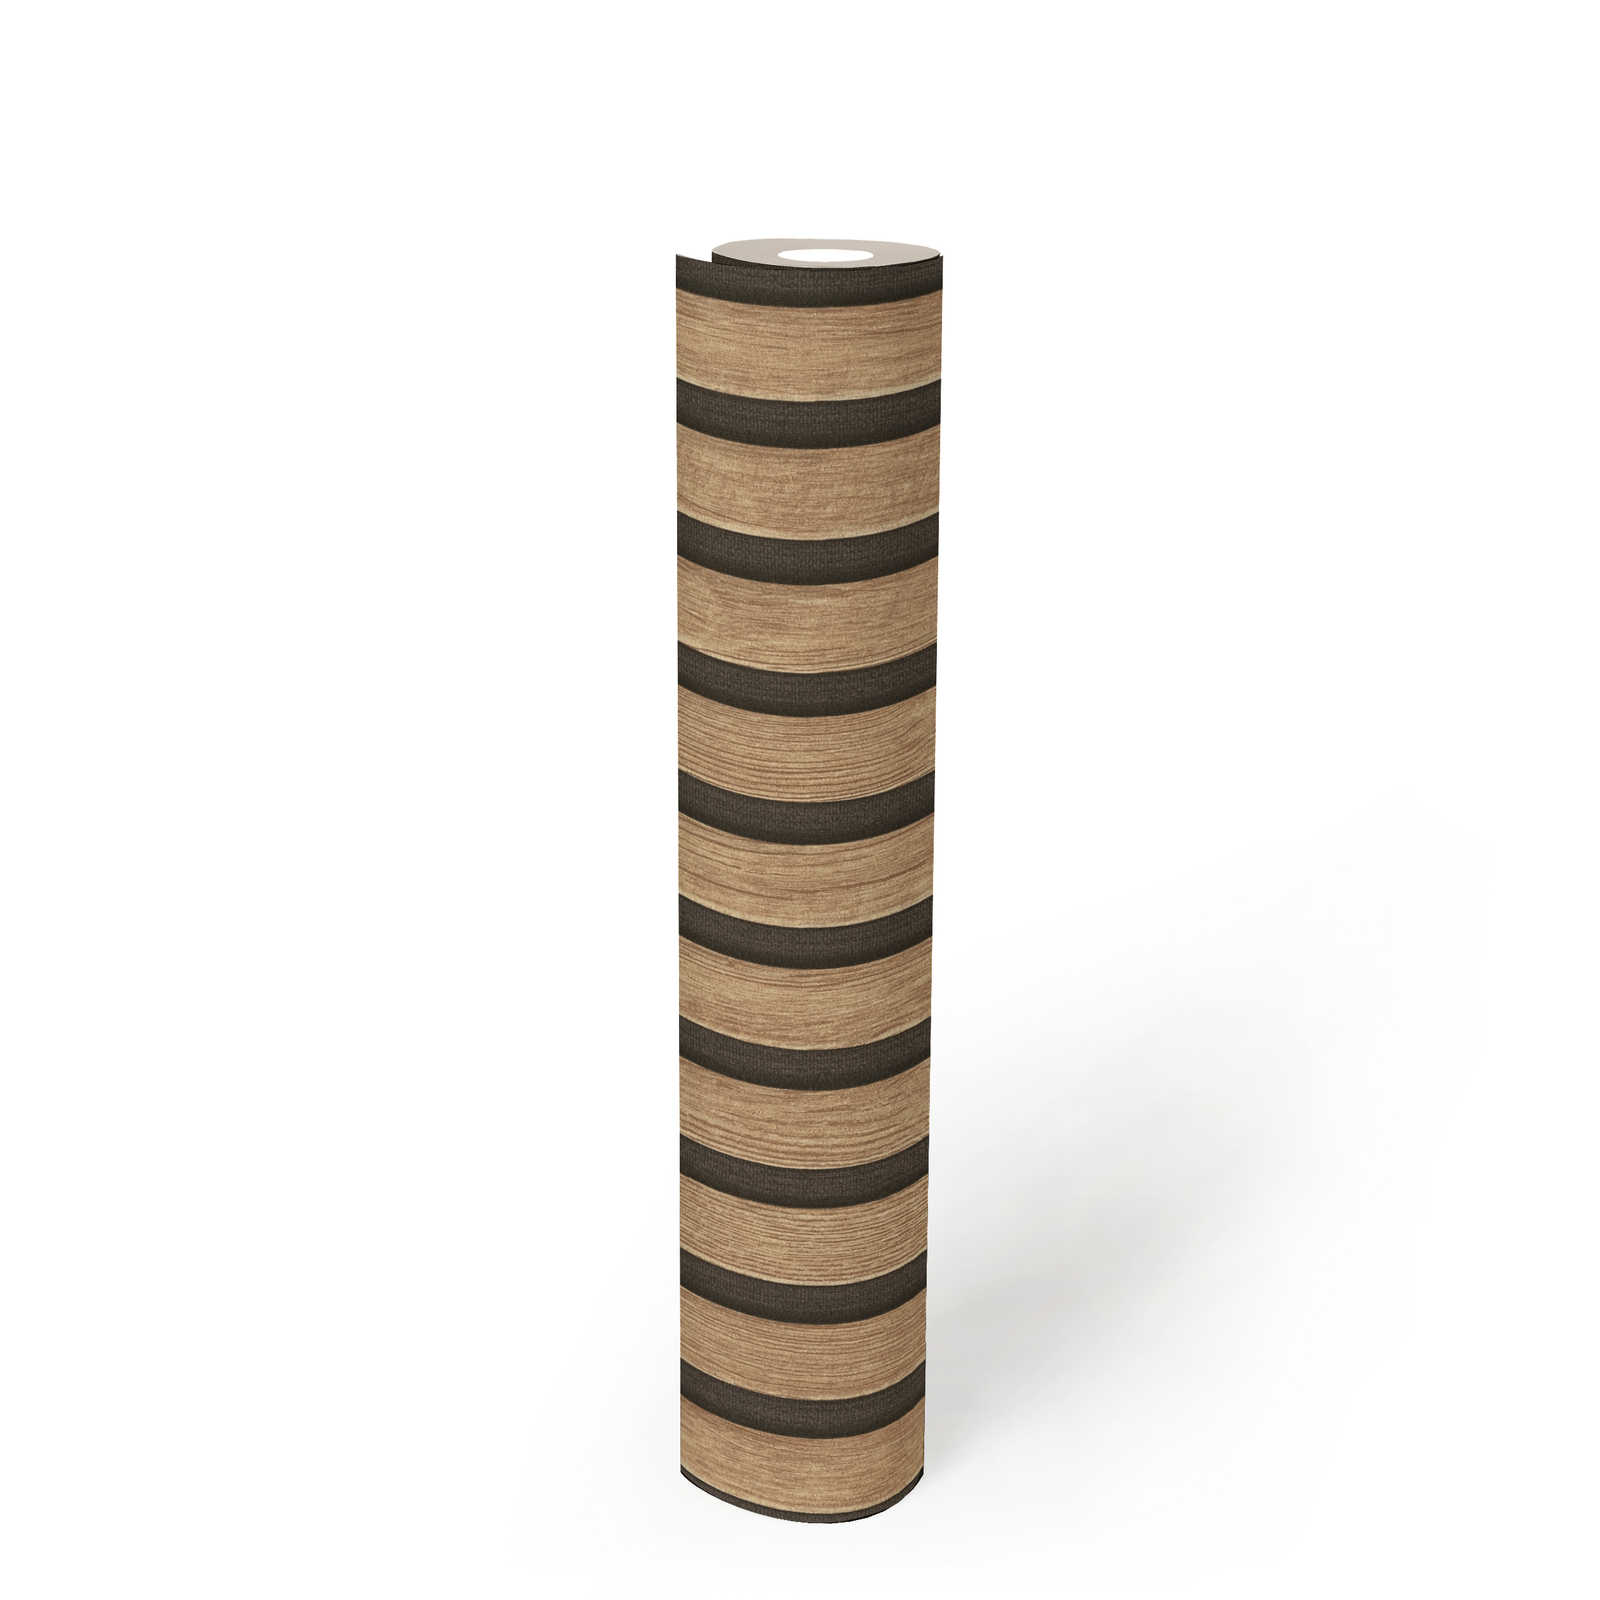             papel pintado con aspecto de madera con patrón de paneles - beige, marrón
        